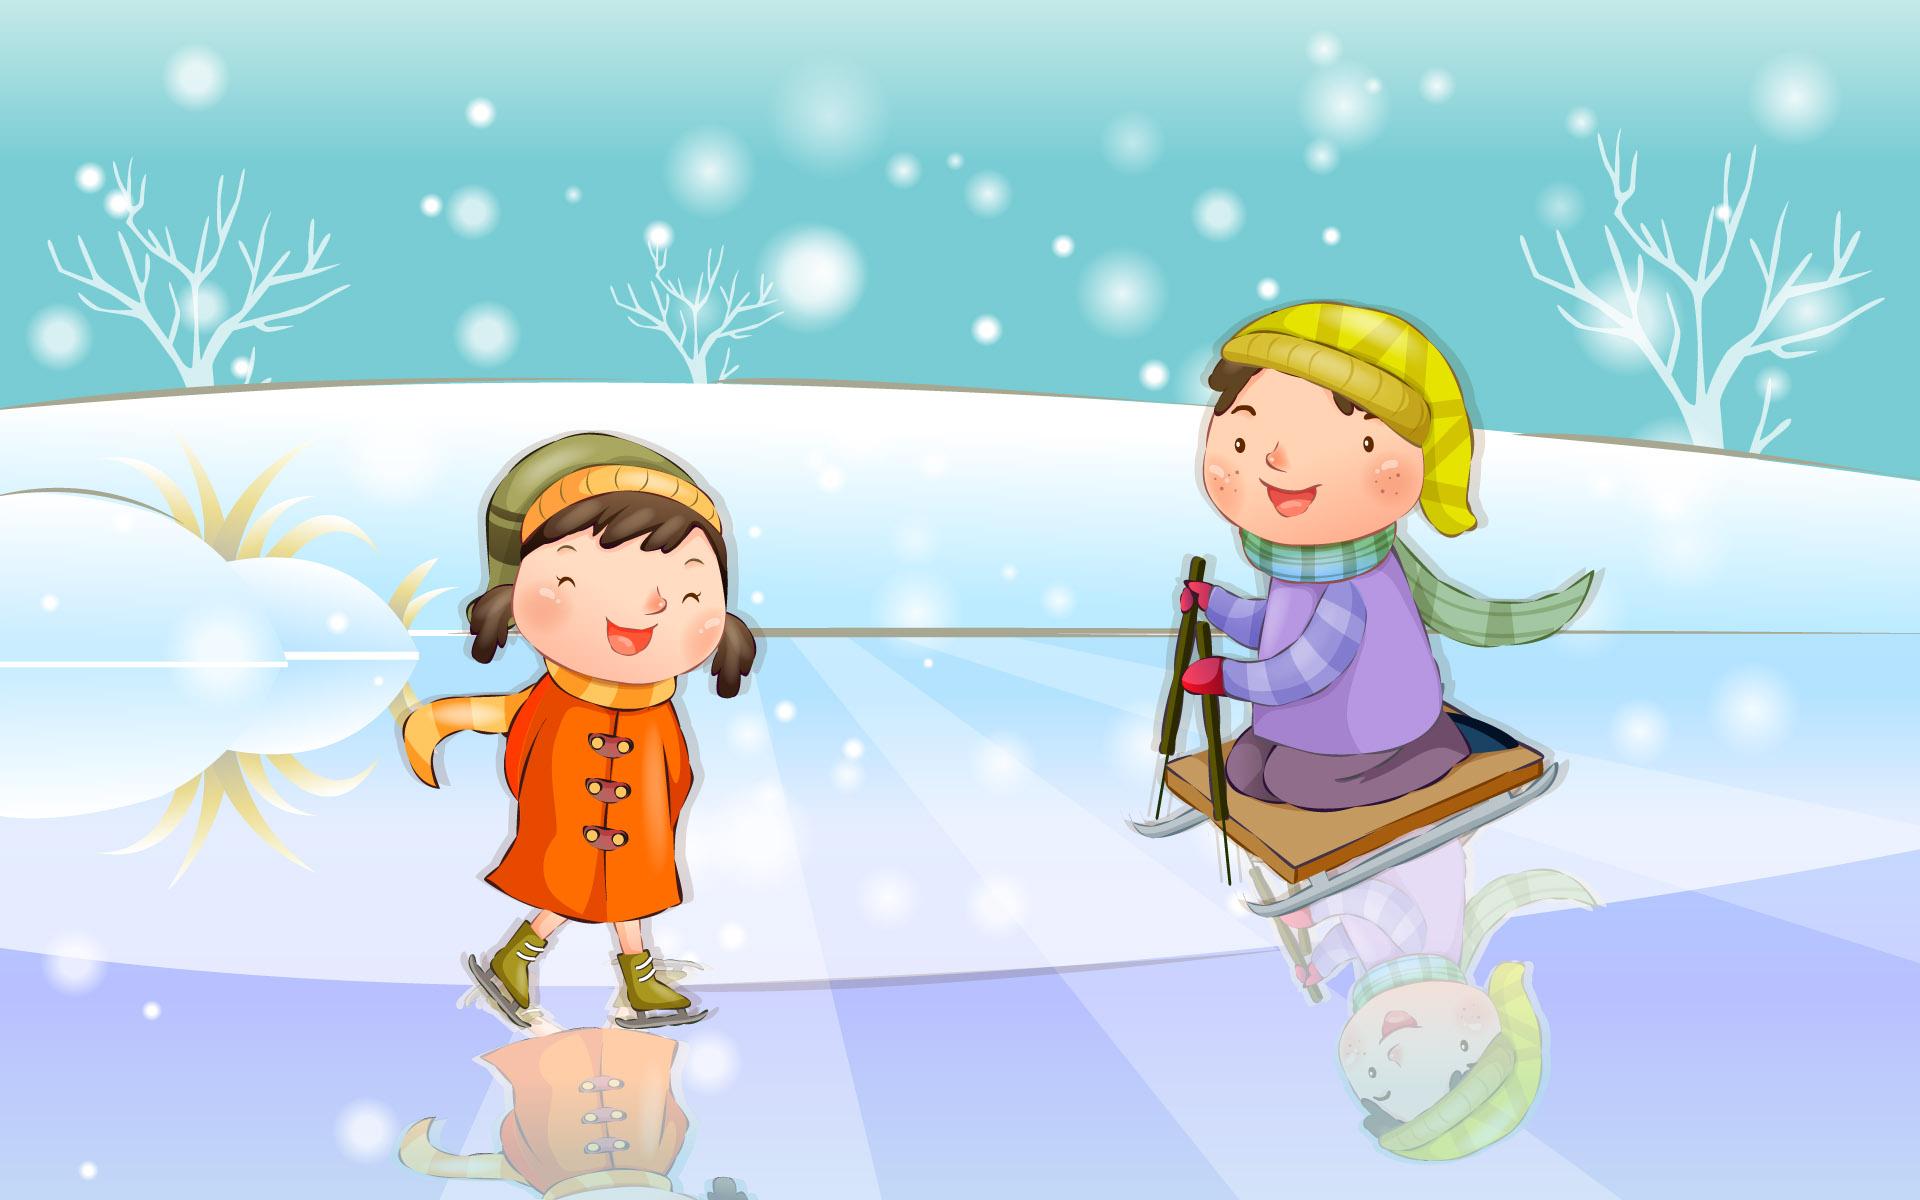 Happy childhood winter chapter illustrations 12431 tales illustration